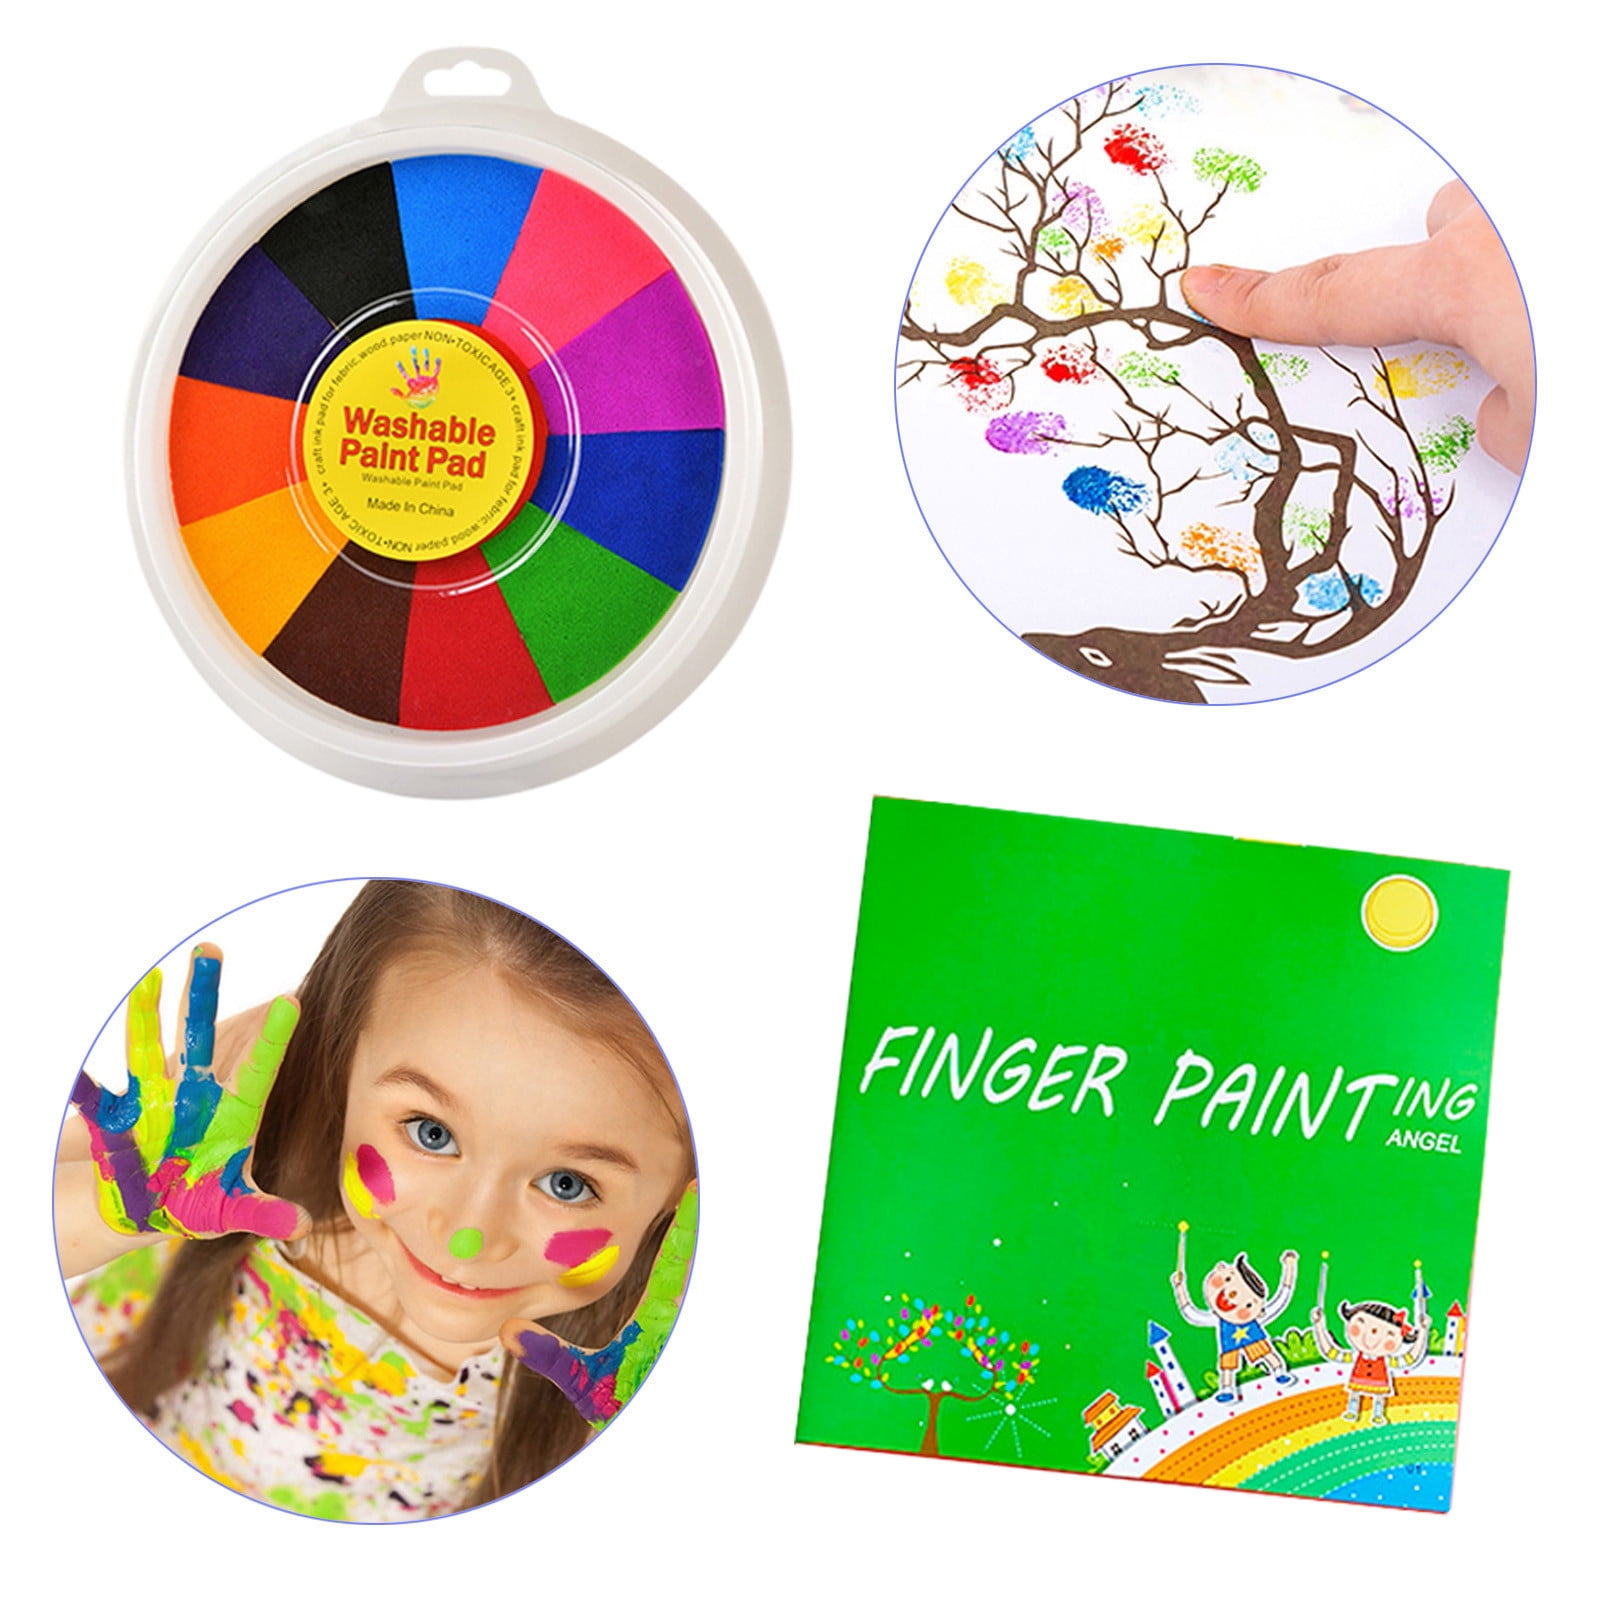 Jual Mideer Creative Finger Paint Kit Painting Mainan Mewarnai Washable -  Animal Party - Kab. Tangerang - Malo Toys